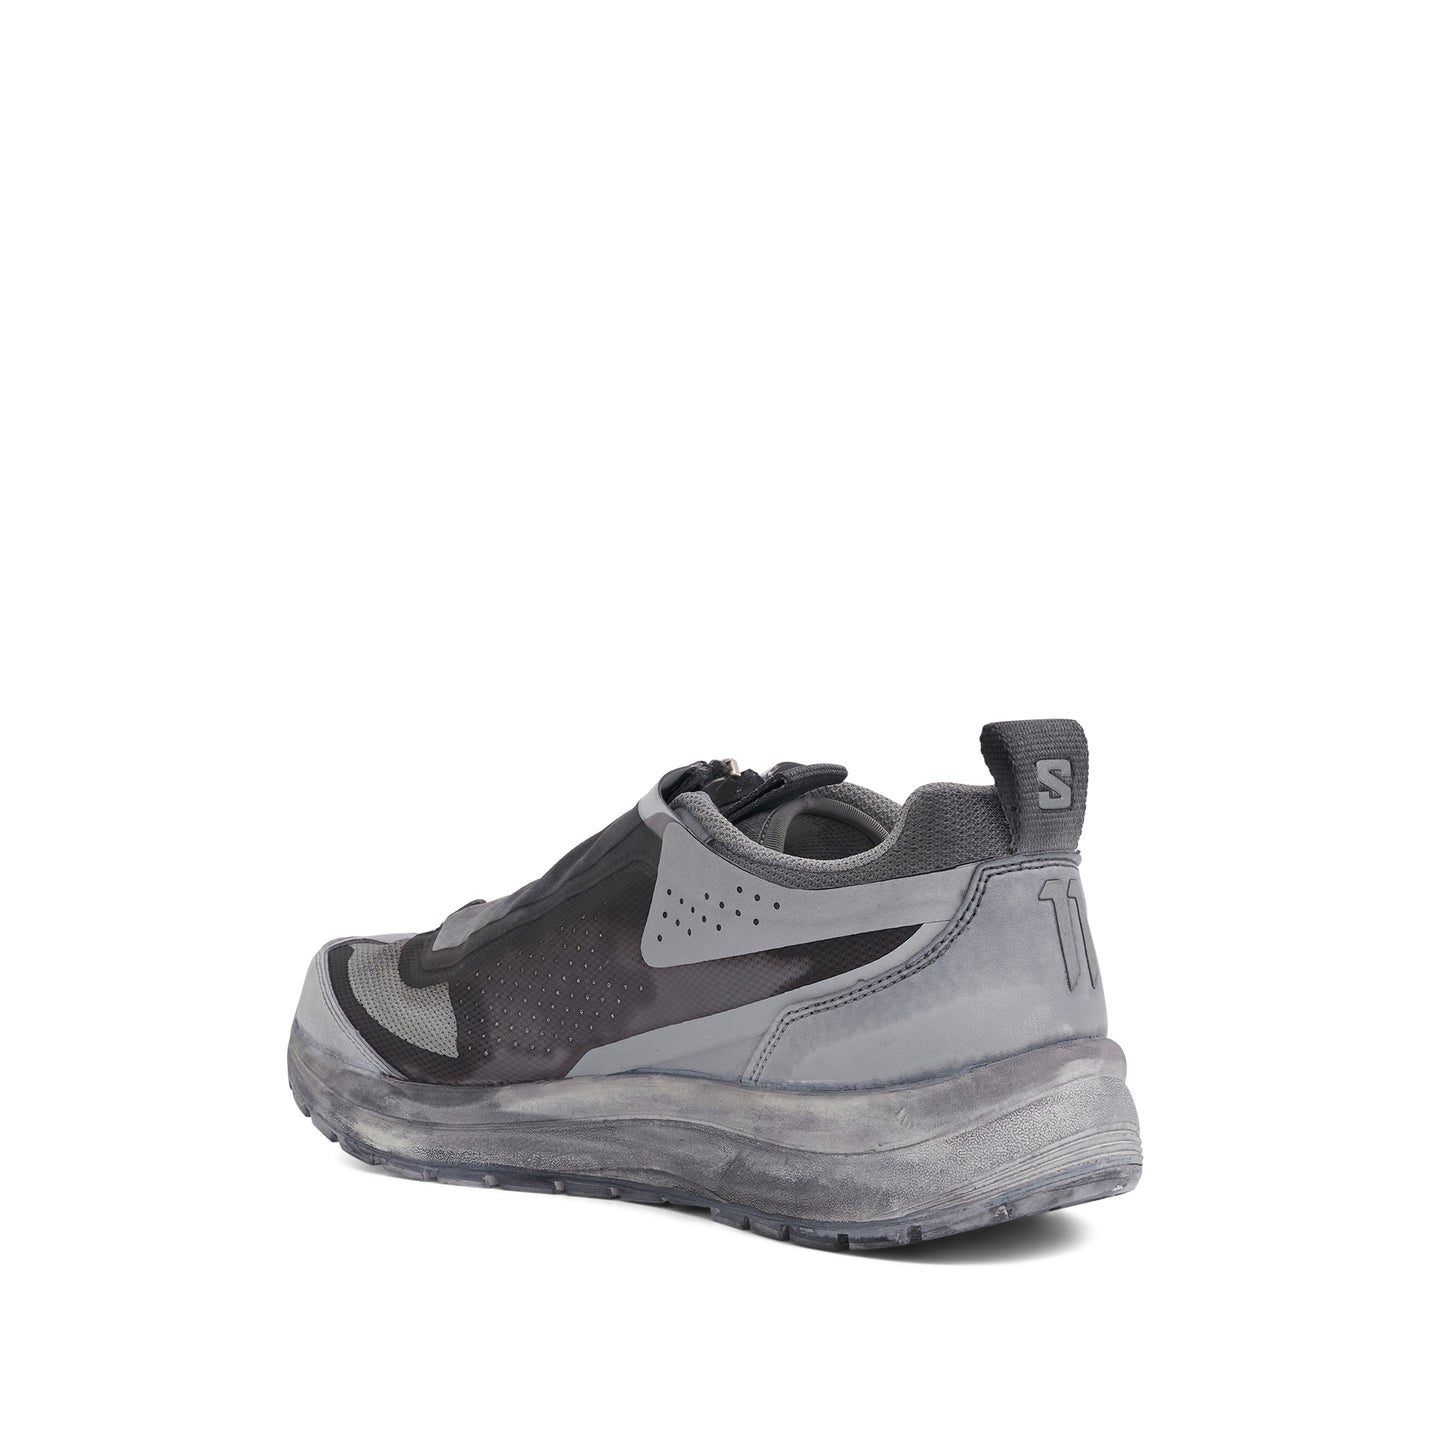 11 BY BBS x Salomon Bamba 2 Sneaker in Light Grey